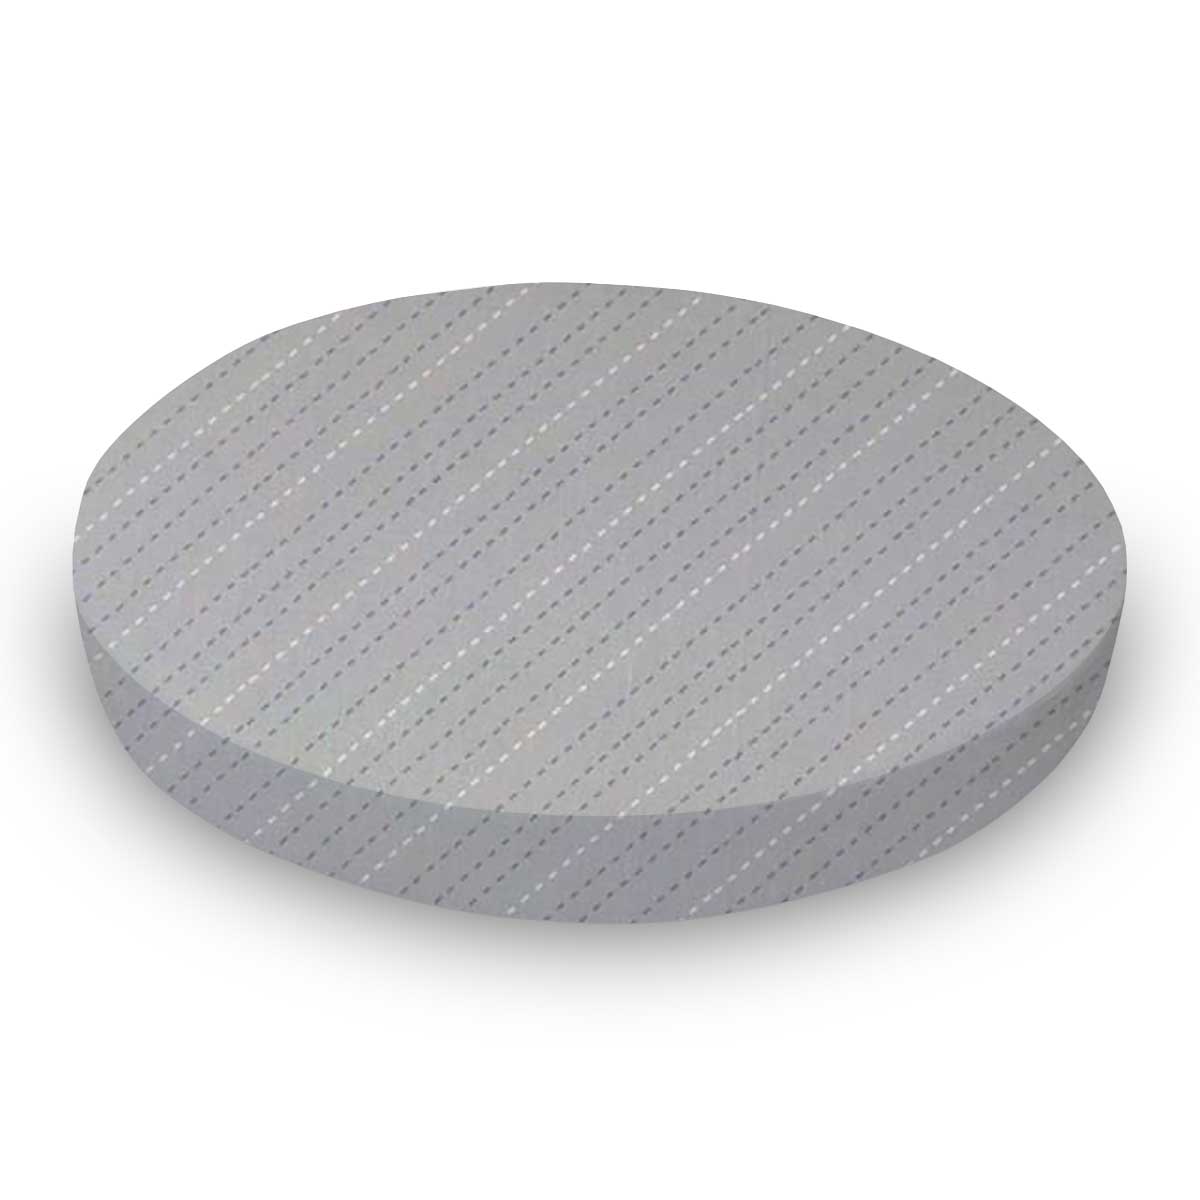 Oval Crib (Stokke Sleepi) - Diagonal Stripe Gray - Fitted  Oval